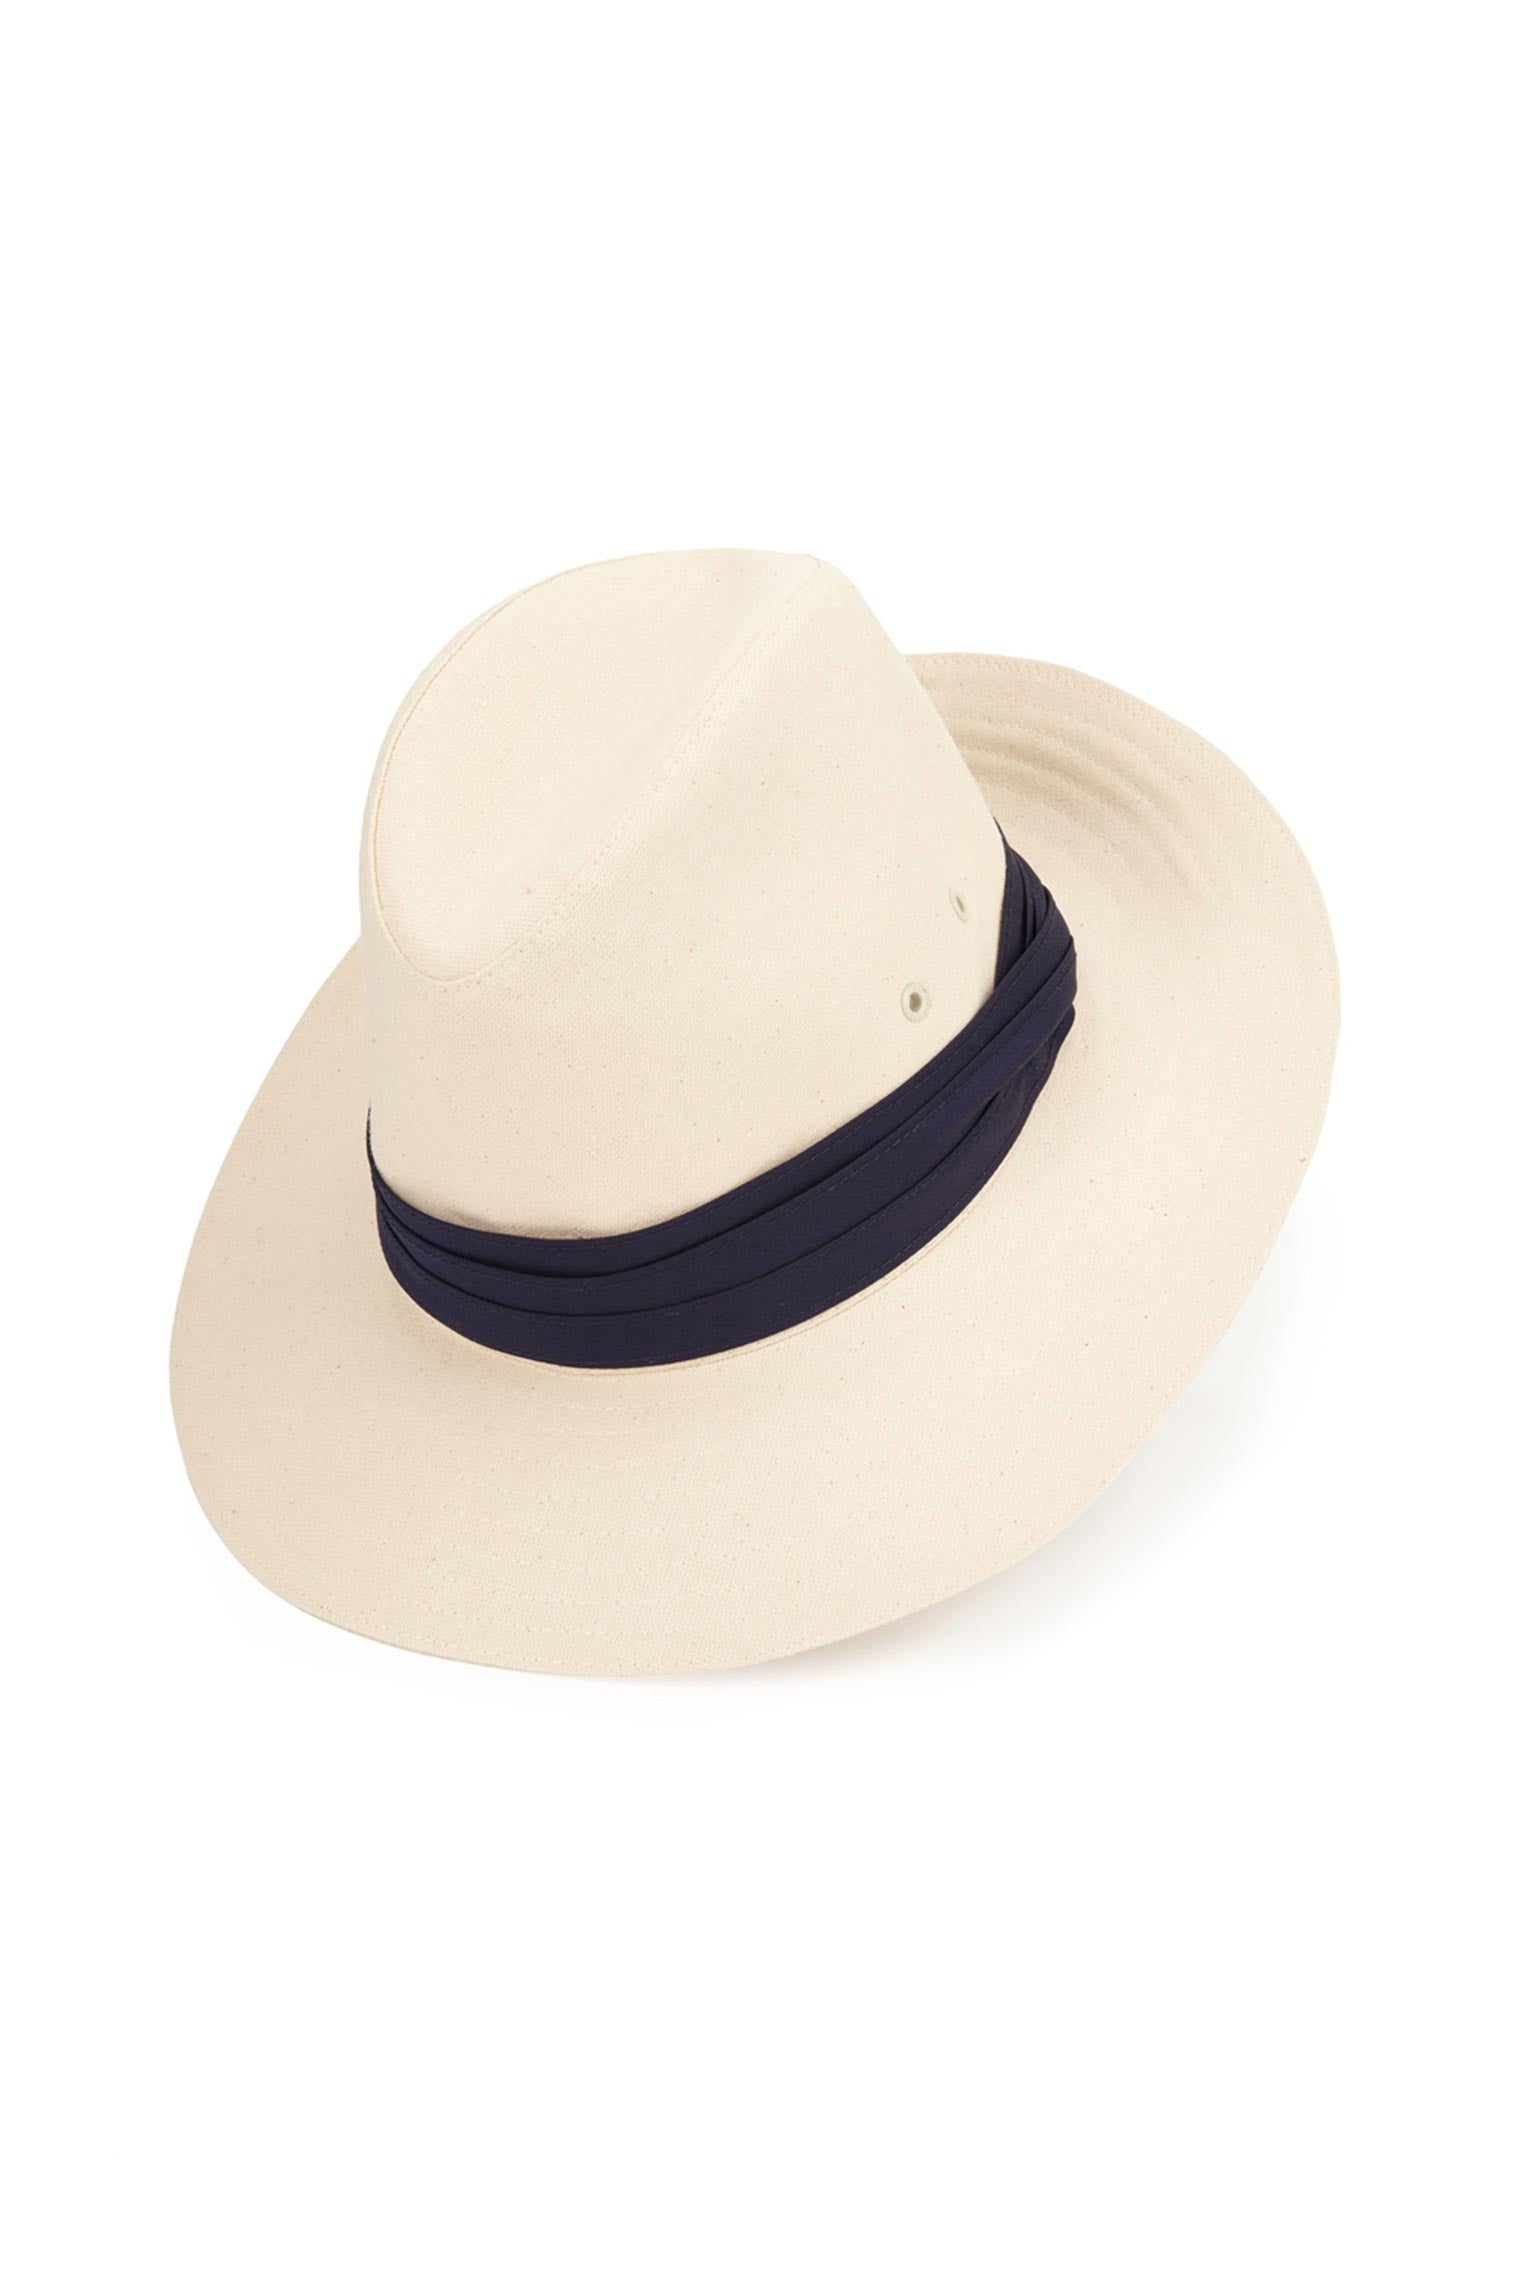 Namibia Calico Fedora - Cotton & Linen Hats & Caps - Lock & Co. Hatters London UK